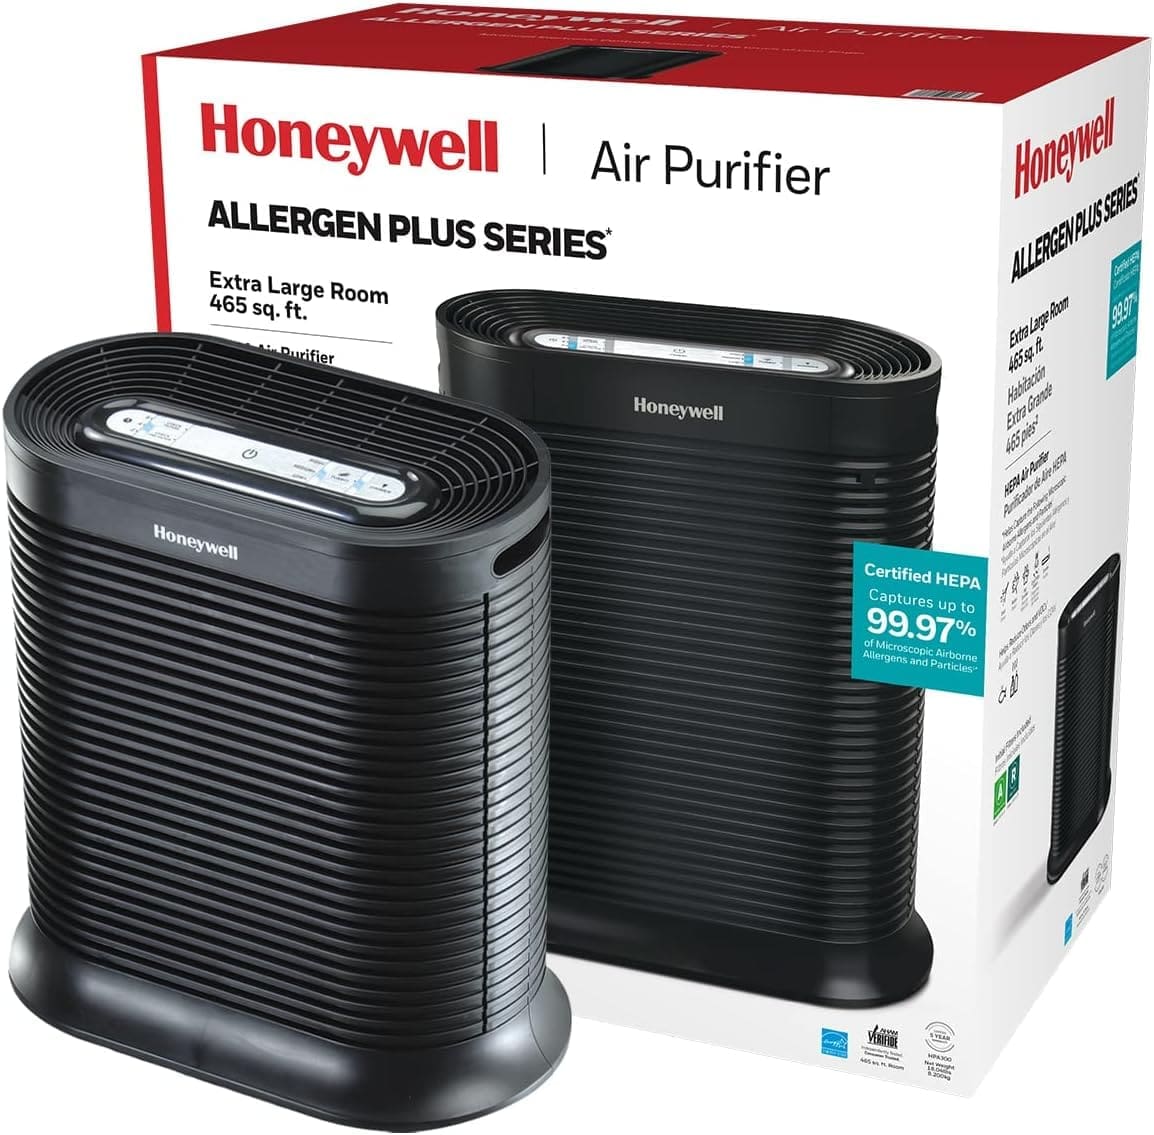 Honeywell HPA300 HEPA Air Purifier Review